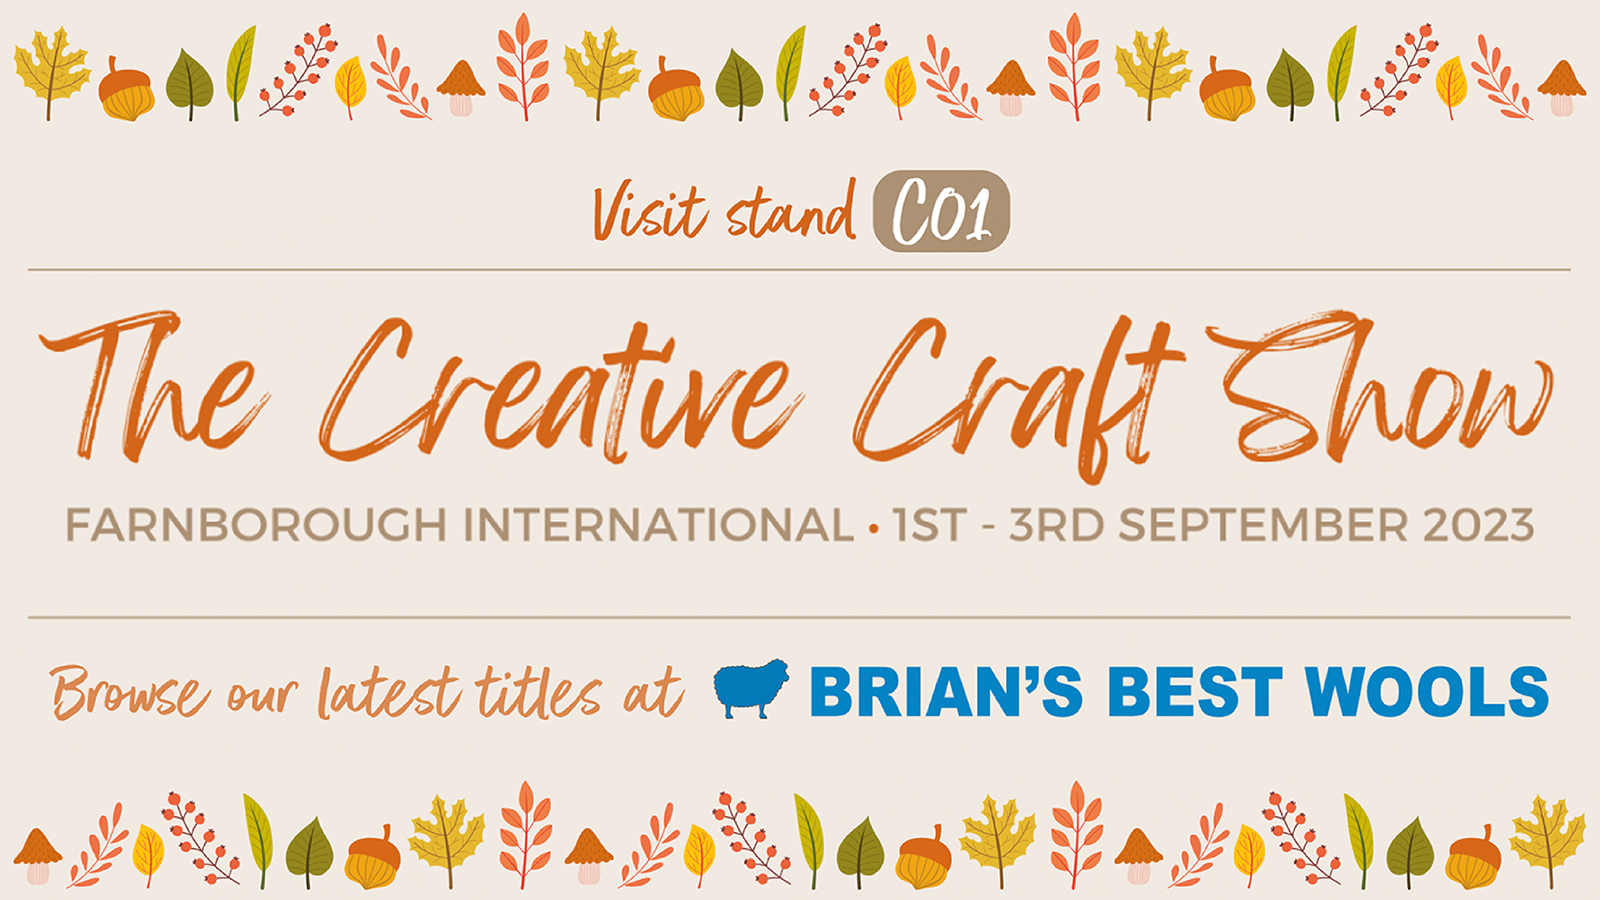 The Creative Craft Show - Farnborough International